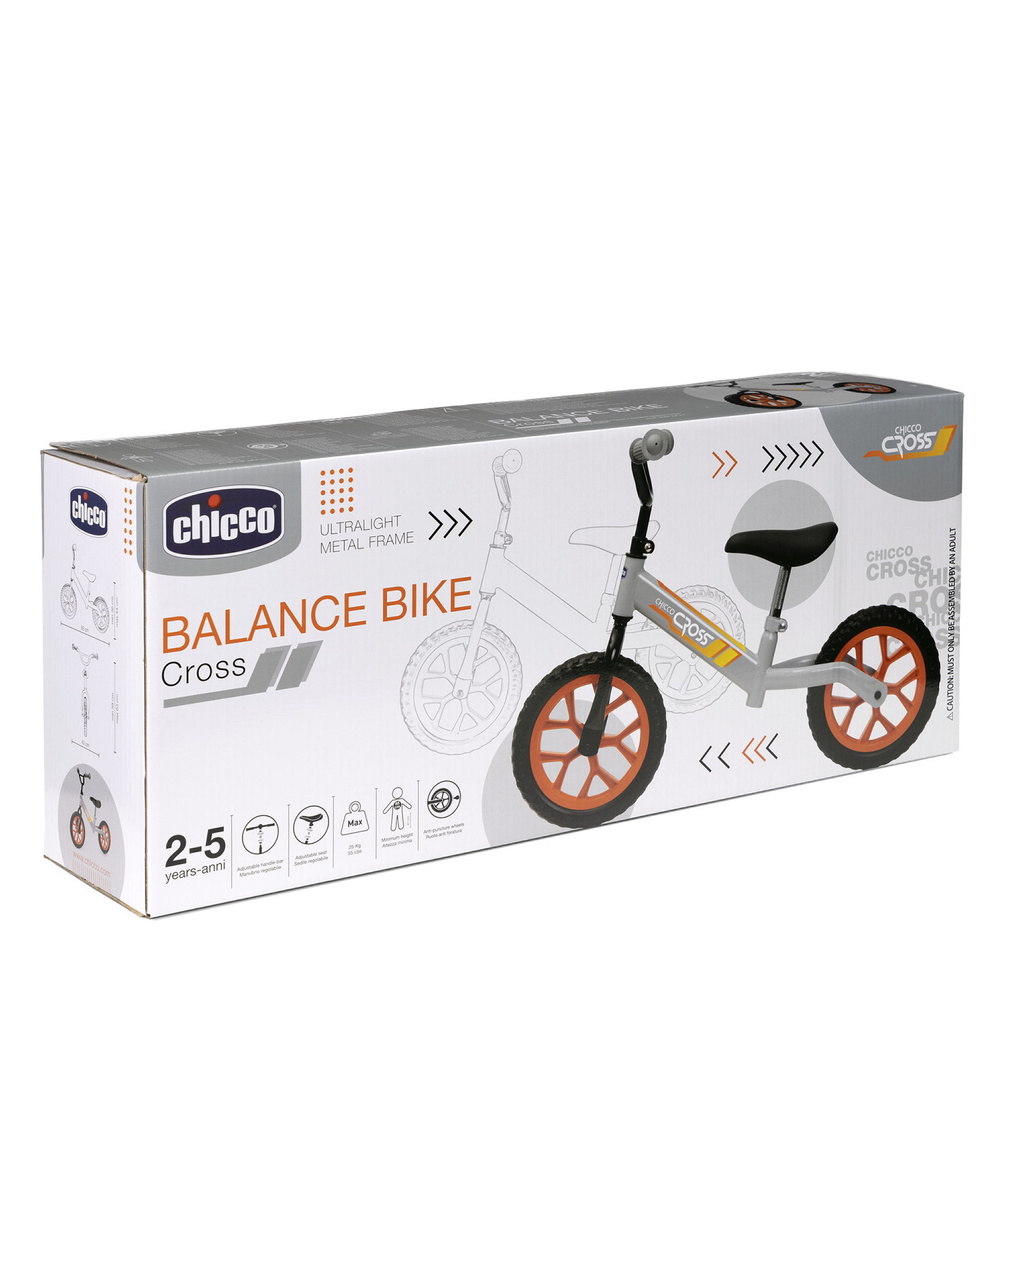 Balance bike cross 2-5 anni - chicco - Chicco